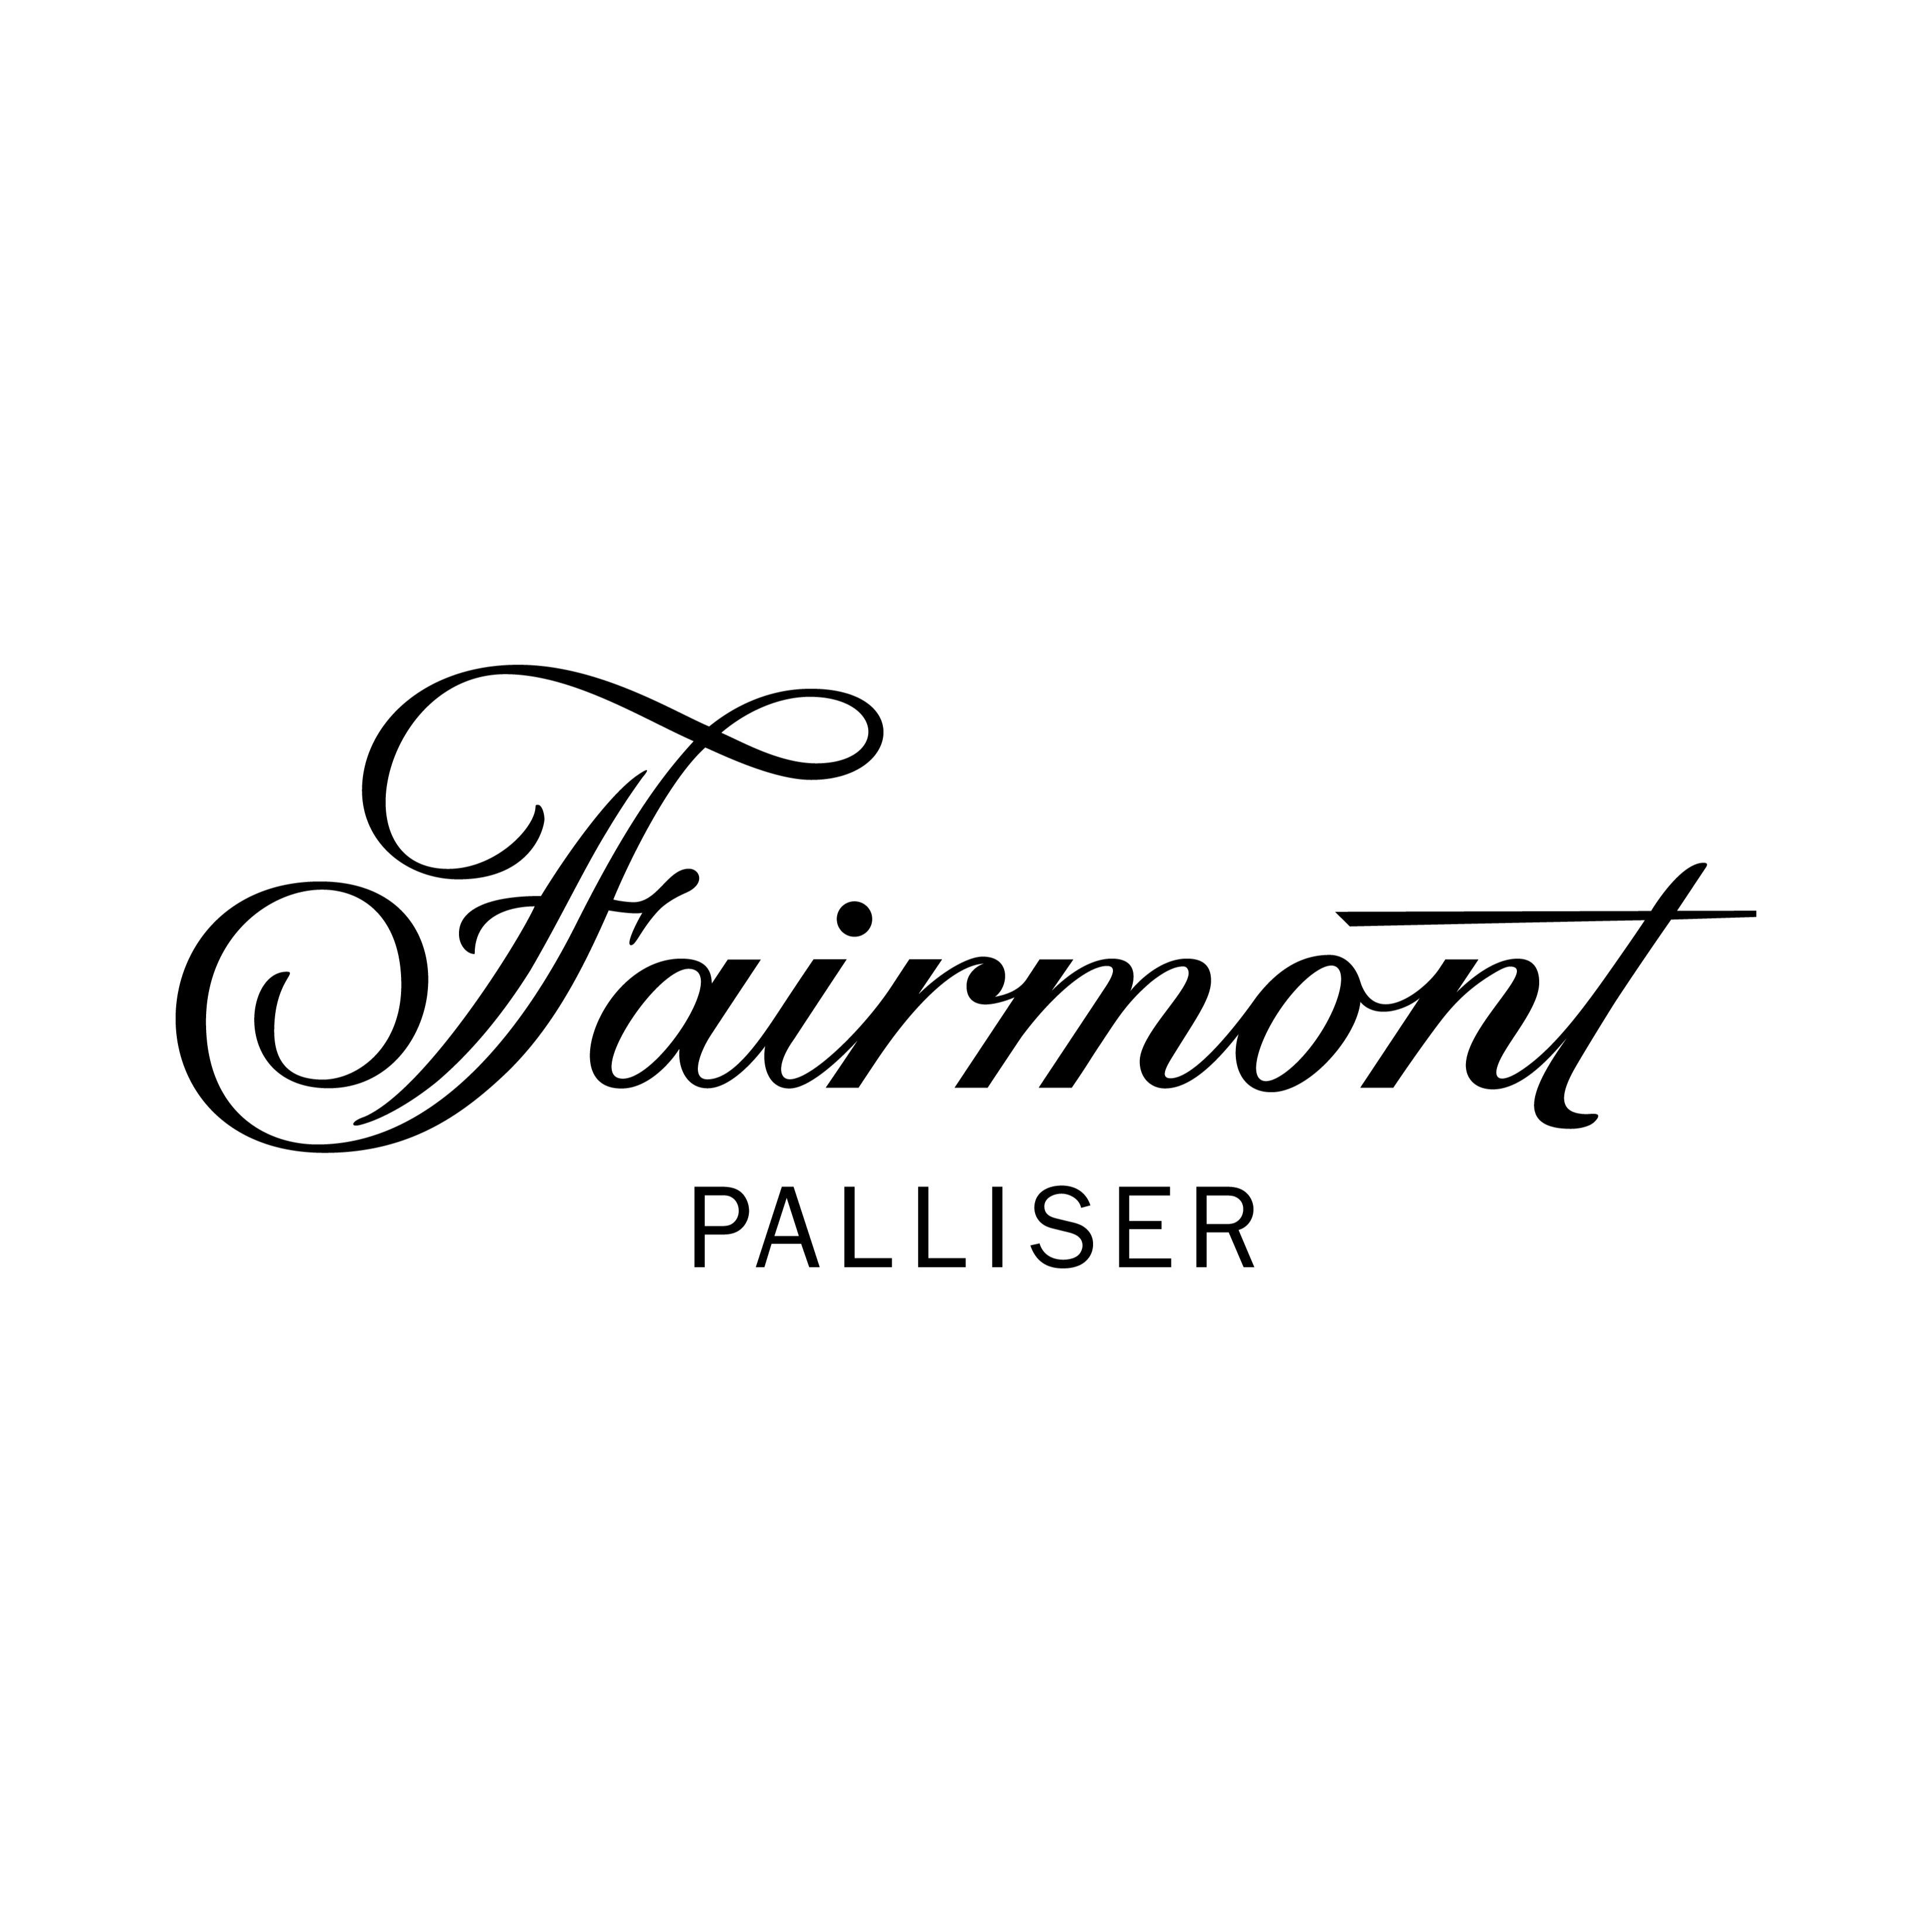 Fairmont Palliser Calgary (403)262-1234